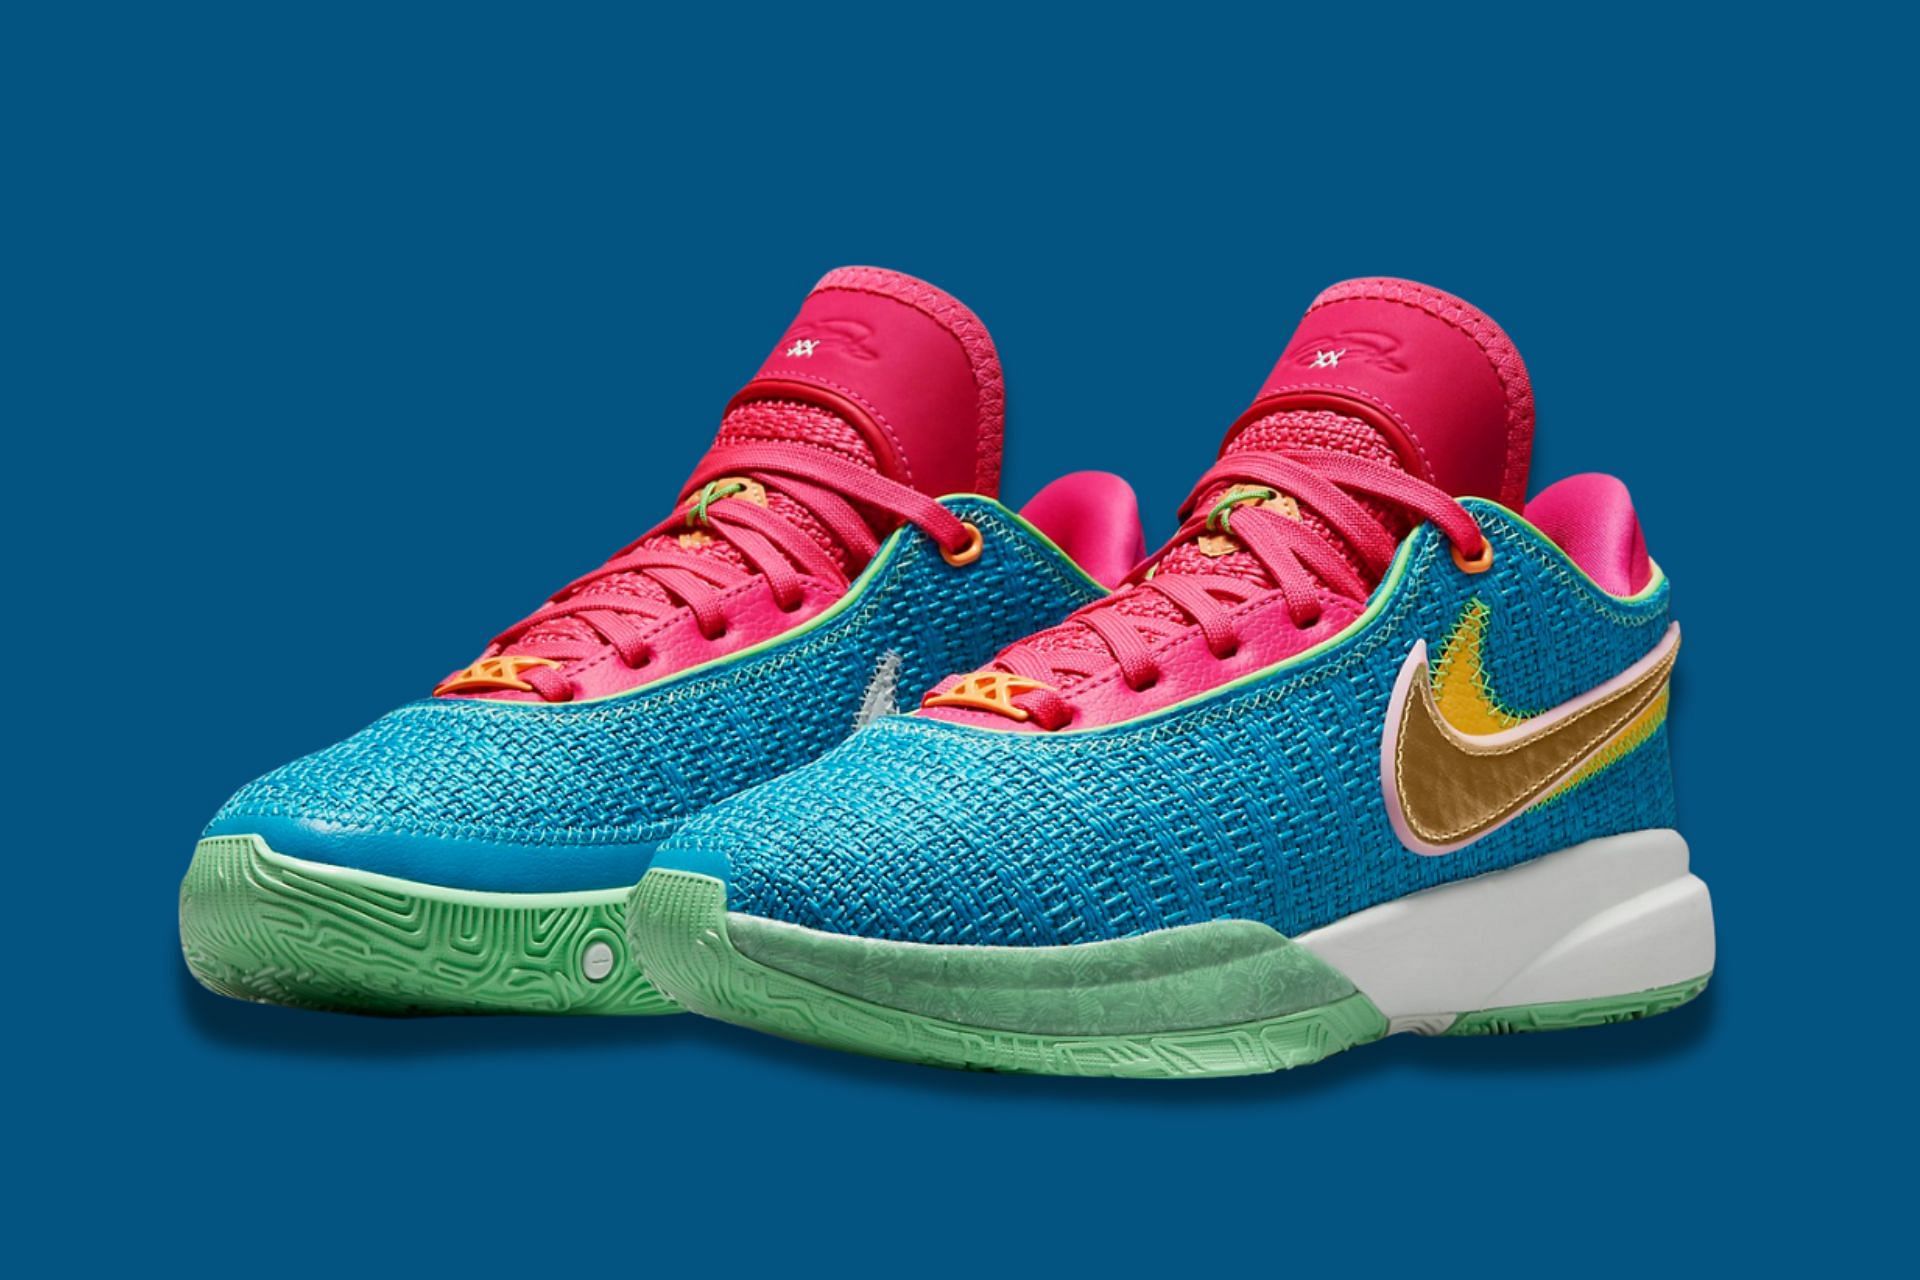 Nike Zoom LeBron 4 'West Coast' Mens Sneakers - Size 10.0